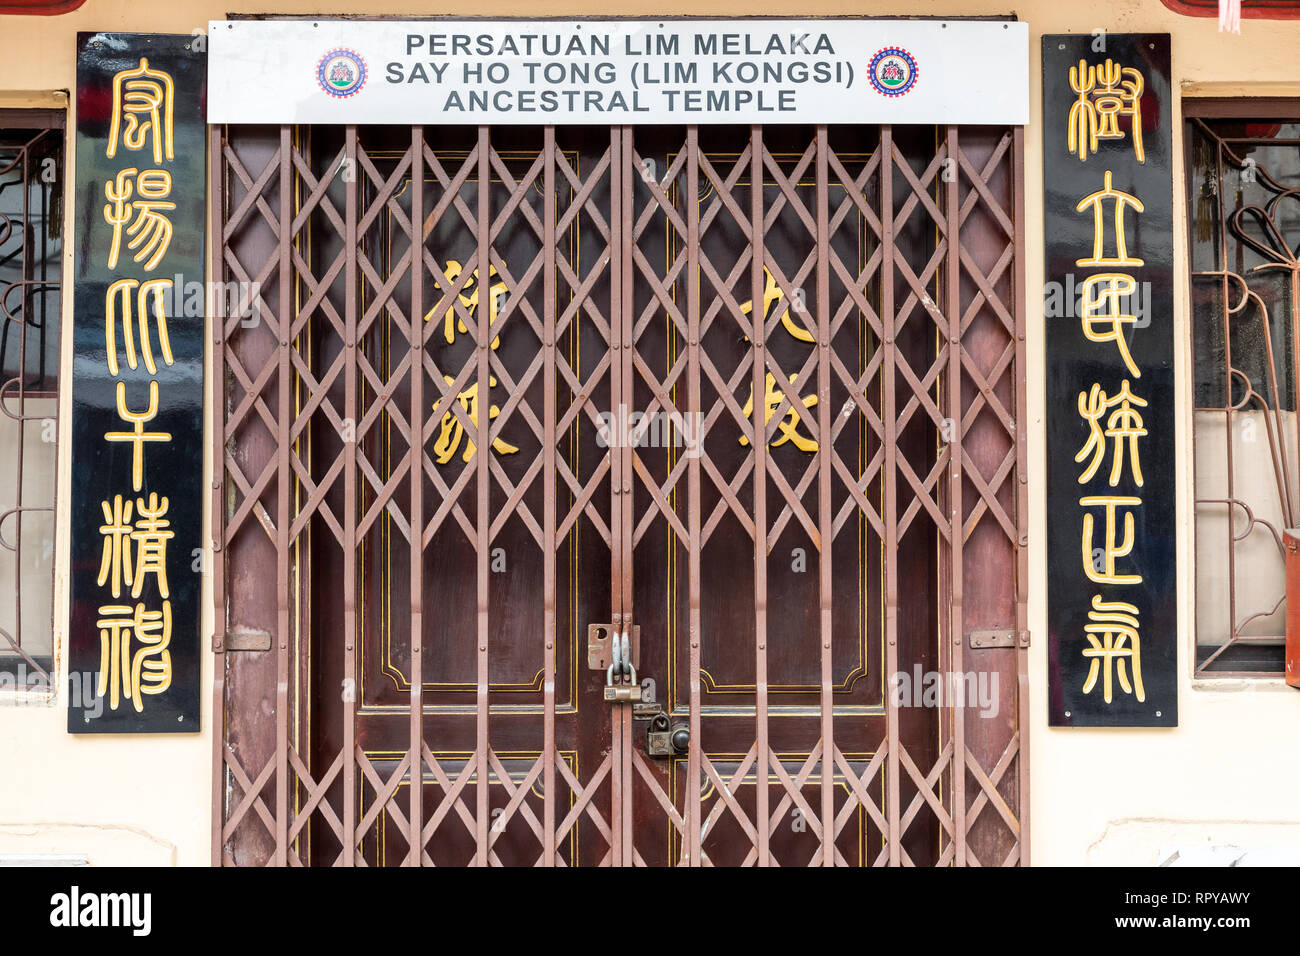 Chinesische Ancestral Tempel Eingang, gesperrt. Melaka, Malaysia. Stockfoto